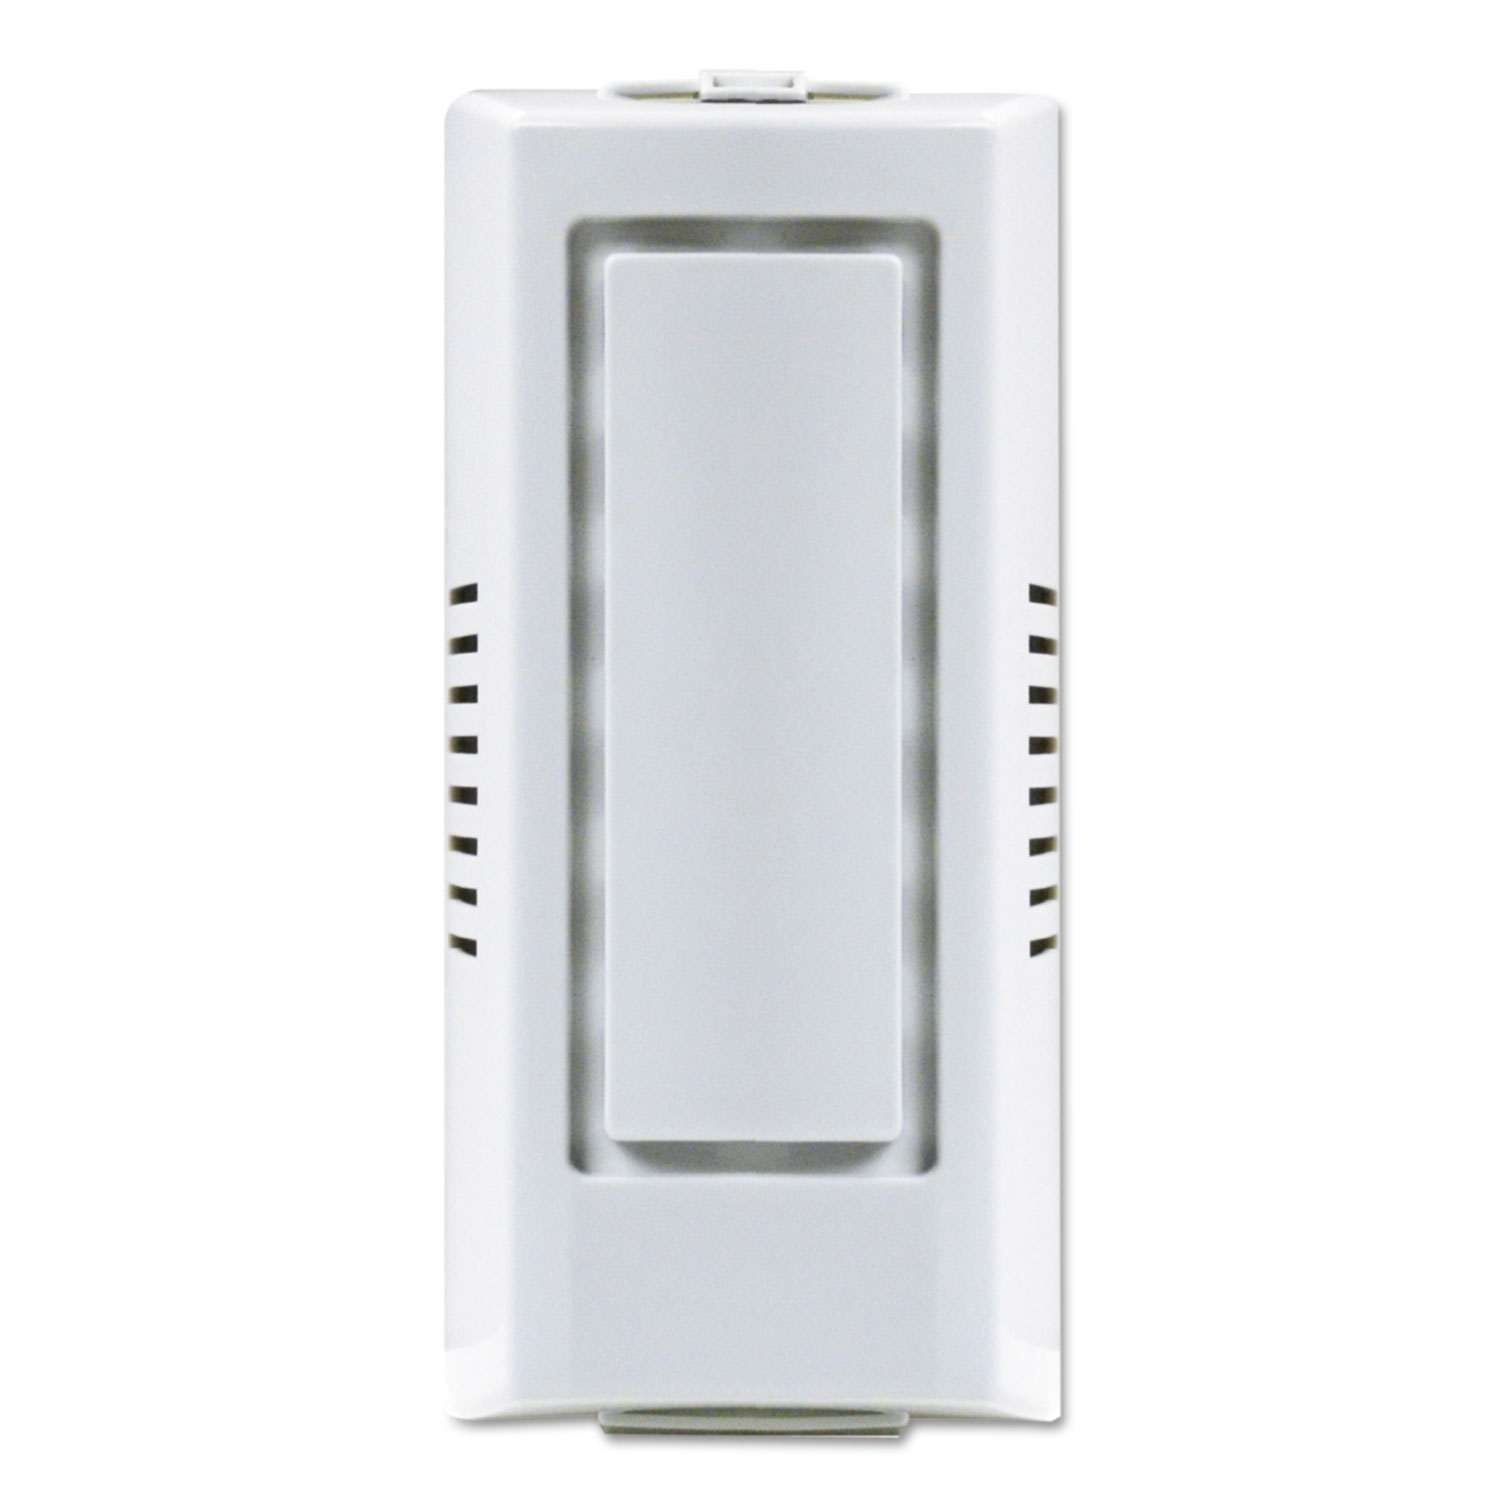  Fresh Products FRS RCAB12 Gel Air Freshener Dispenser Cabinet, 4 x 3.5 x 8.75, White (FRSRCAB12) 